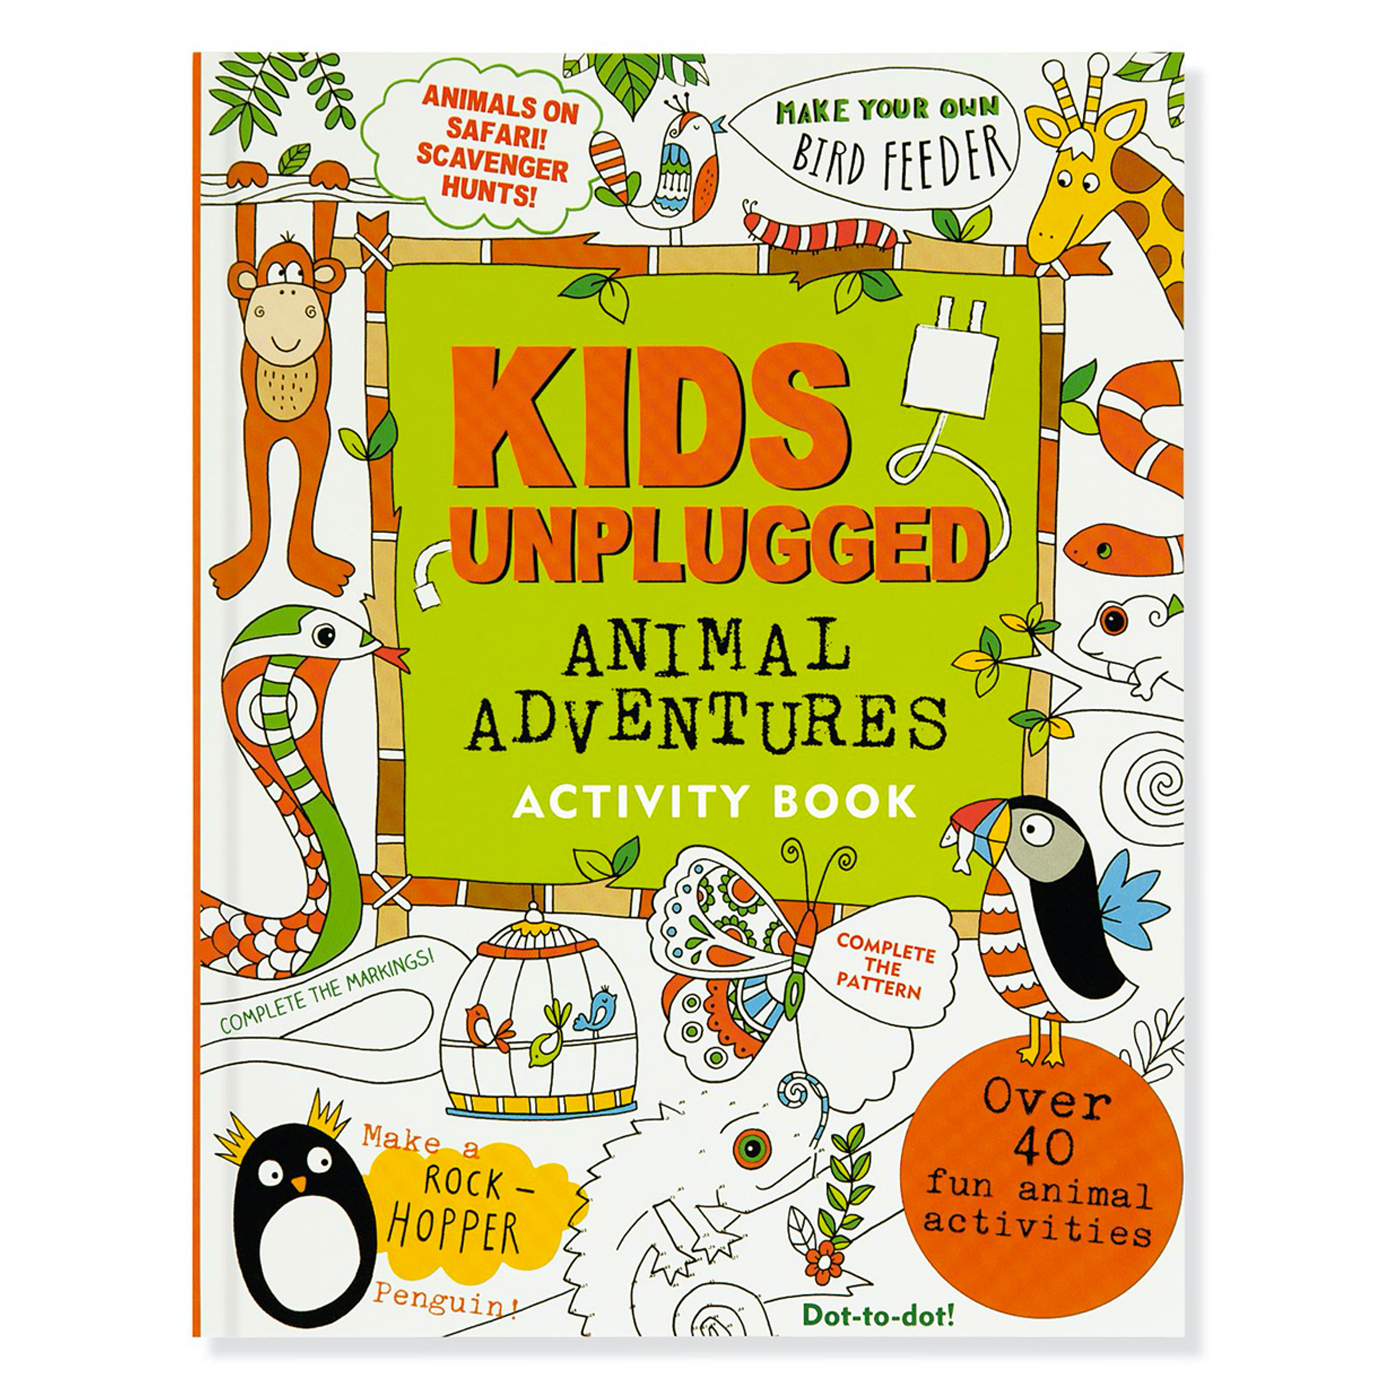  Kids Unplugged Animal Adventures Activity Book